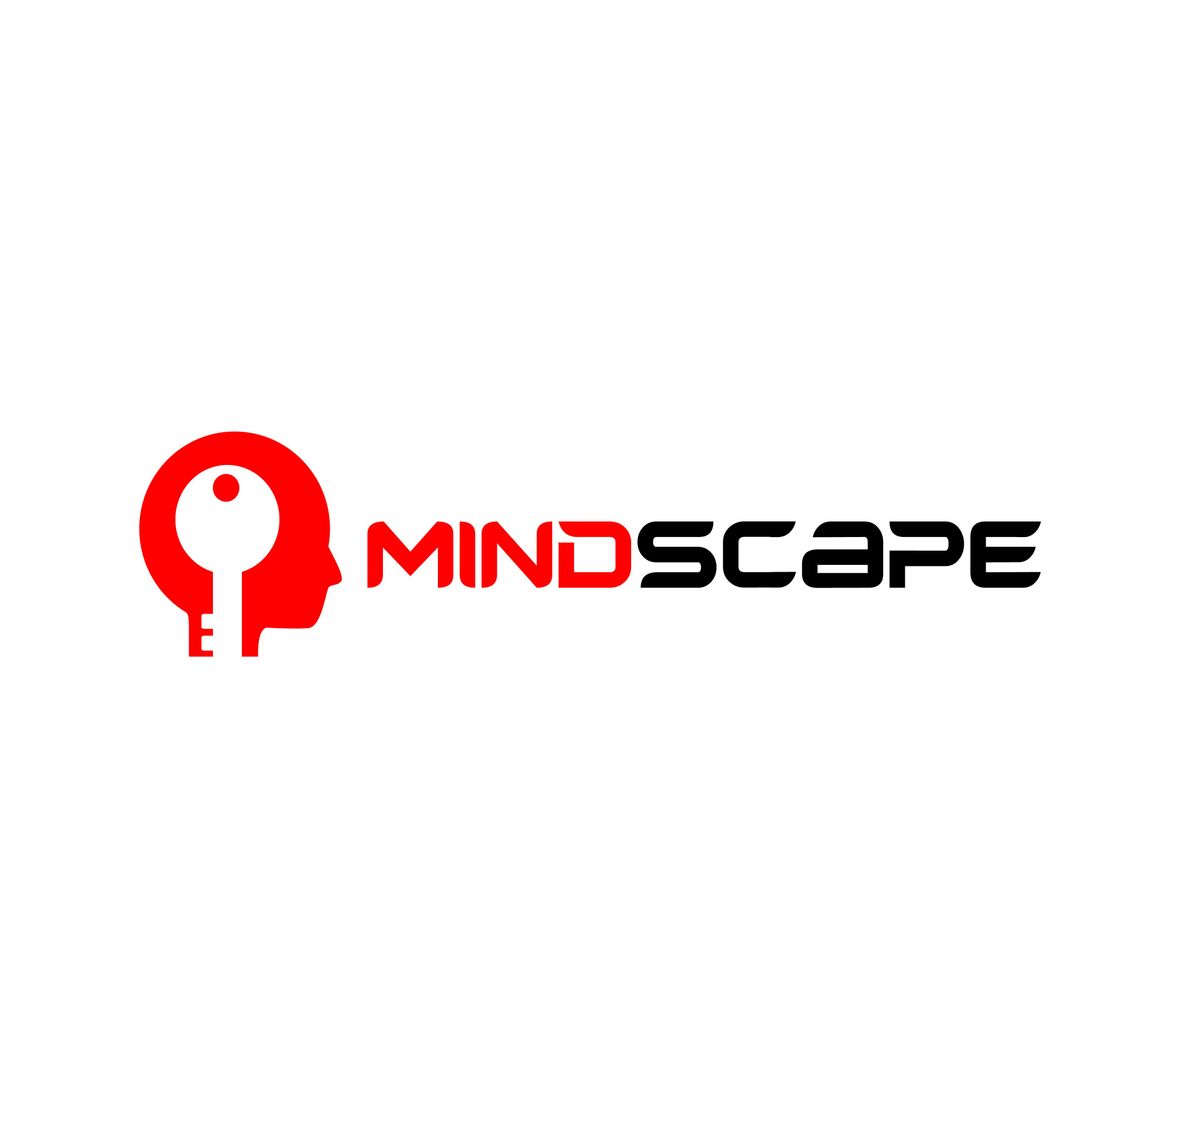 The logo for Mindscape.